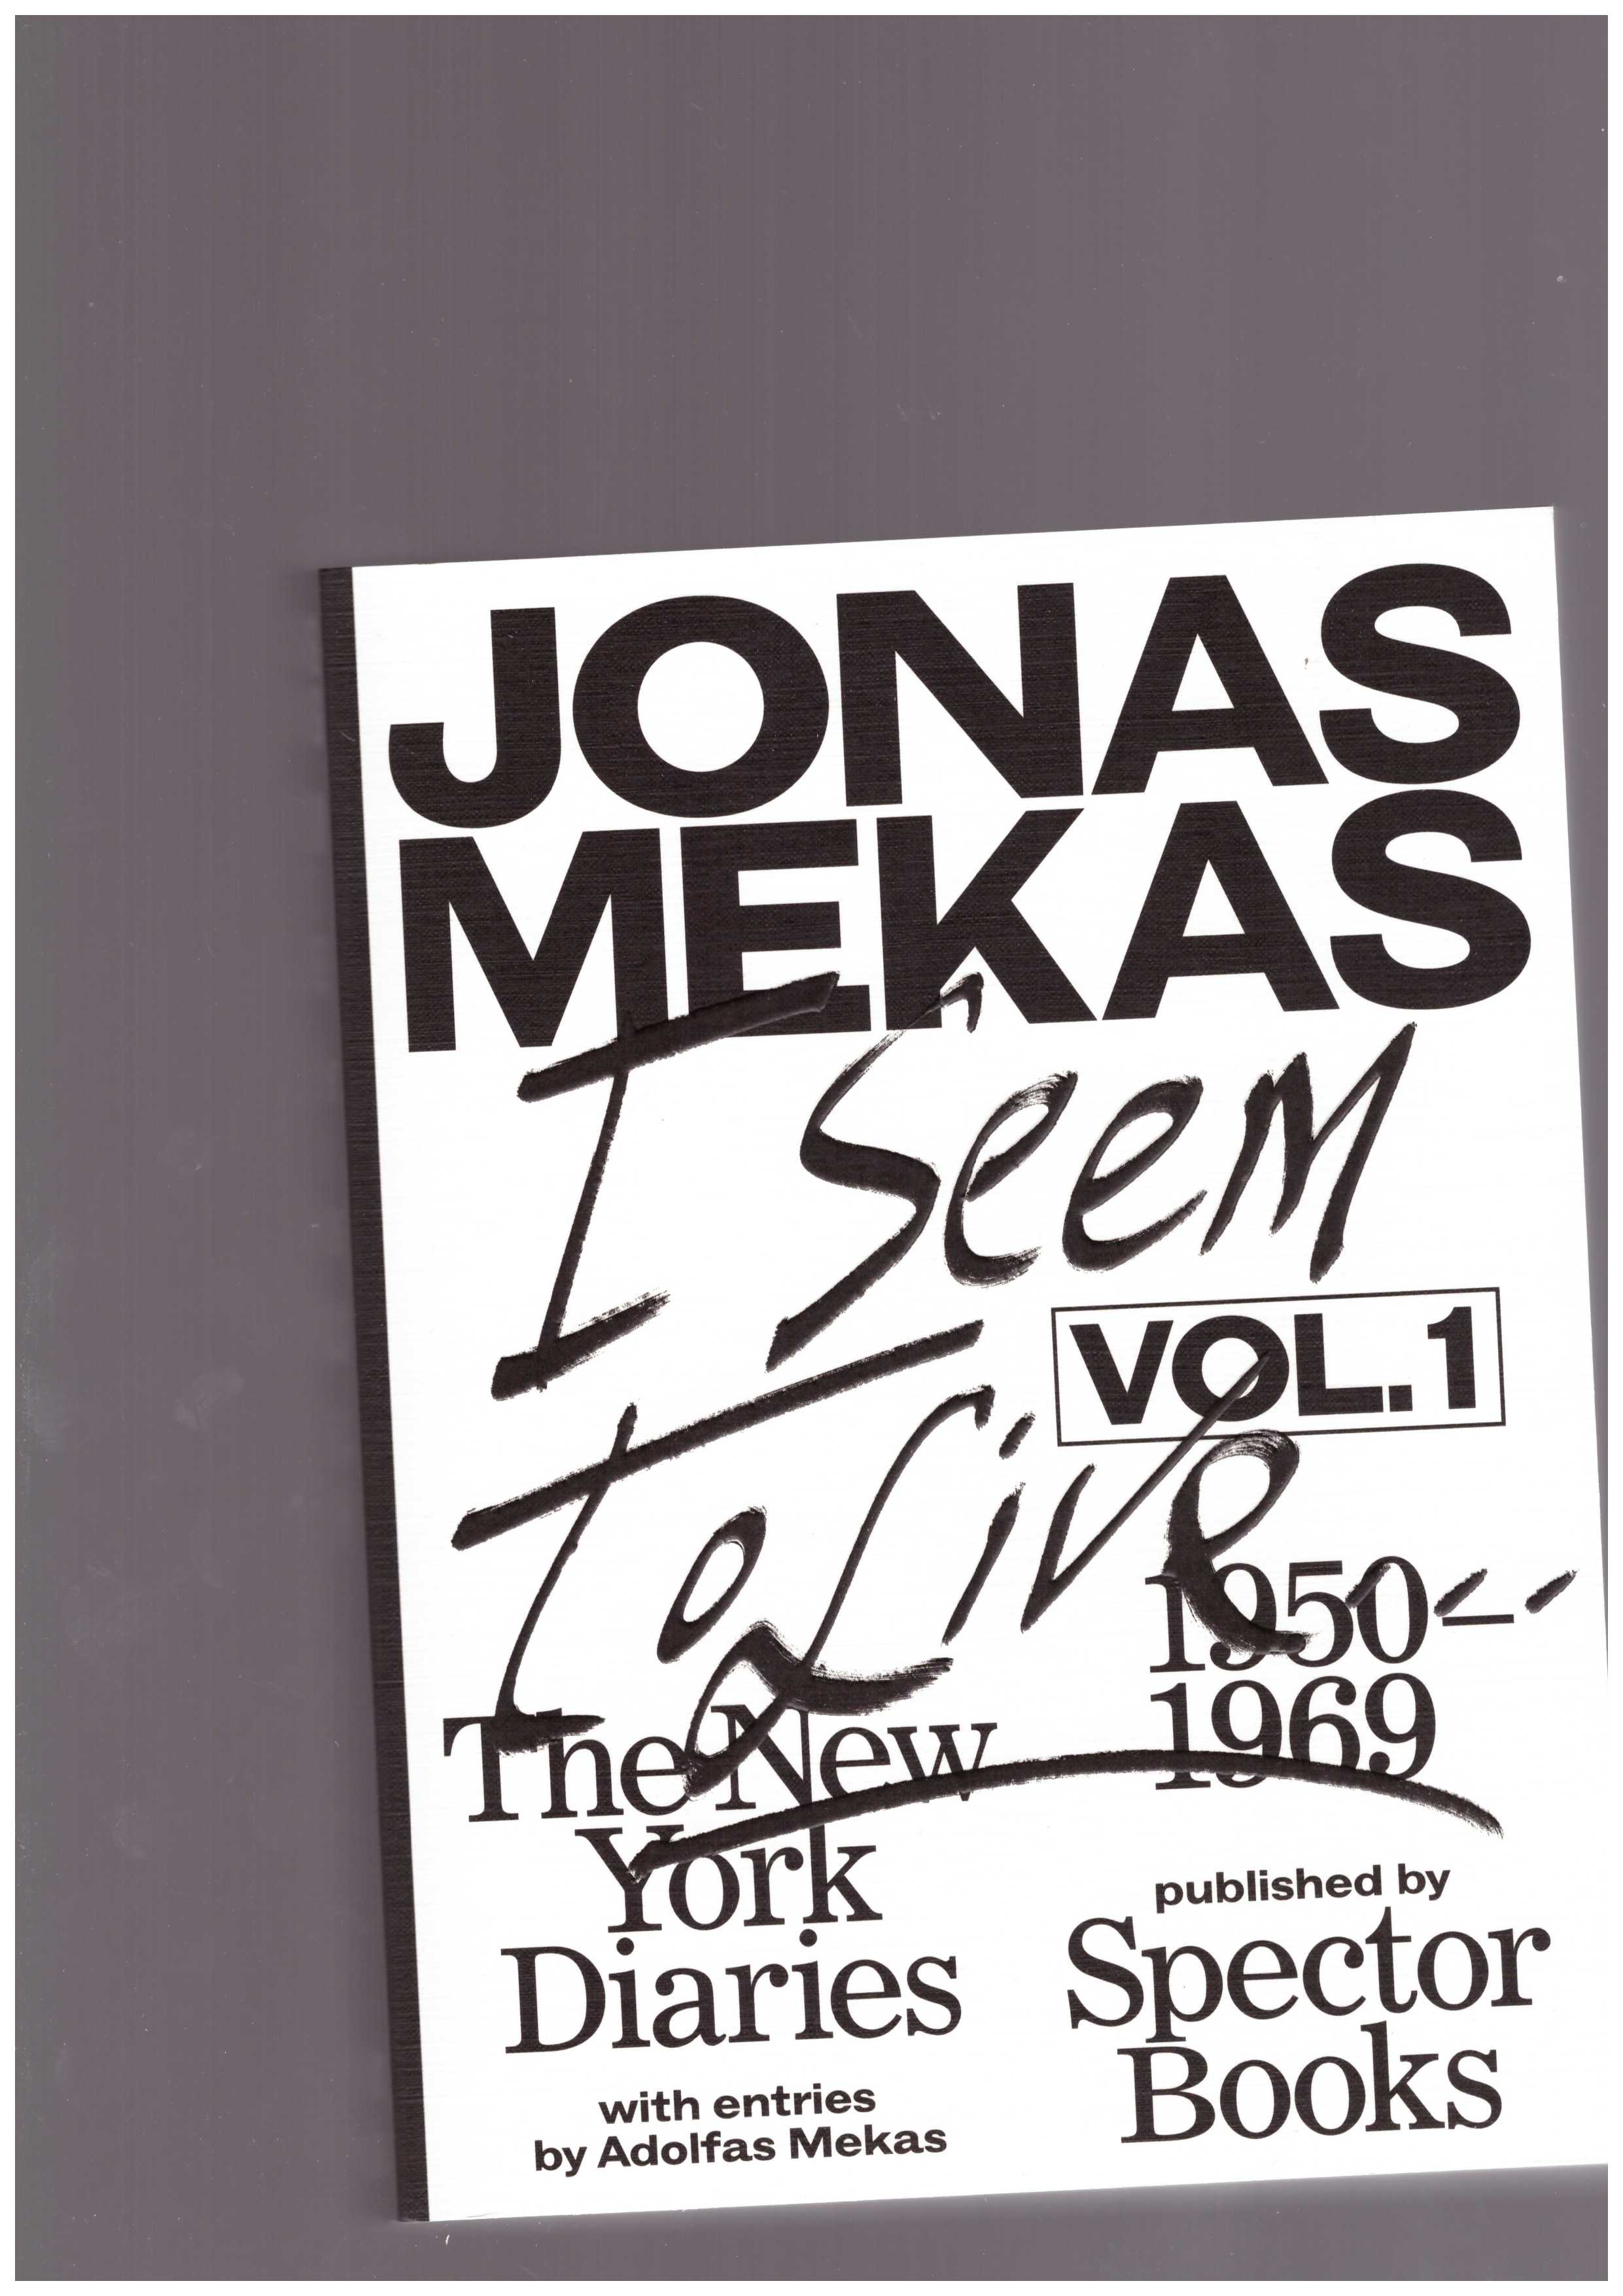 MEKAS, Jonas - I Seem to Live. The New York Diaries. vol. 1, 1950-1969